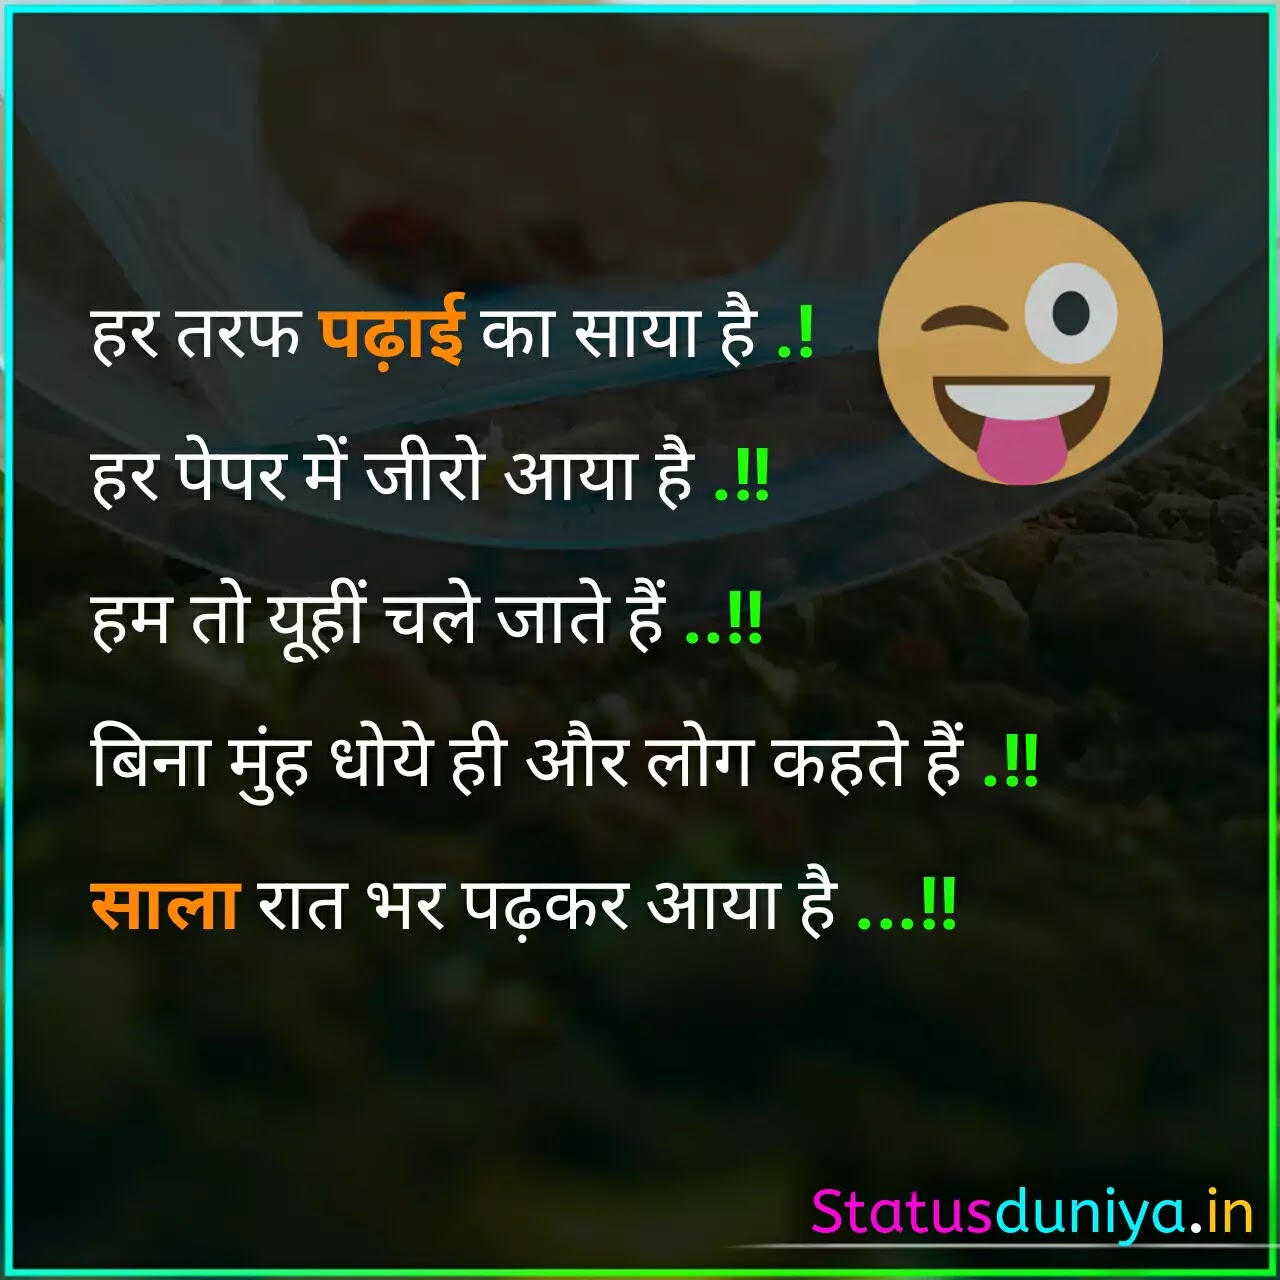 87+ Funny Study Status In Hindi For Whatsapp With Image - Status Duniya